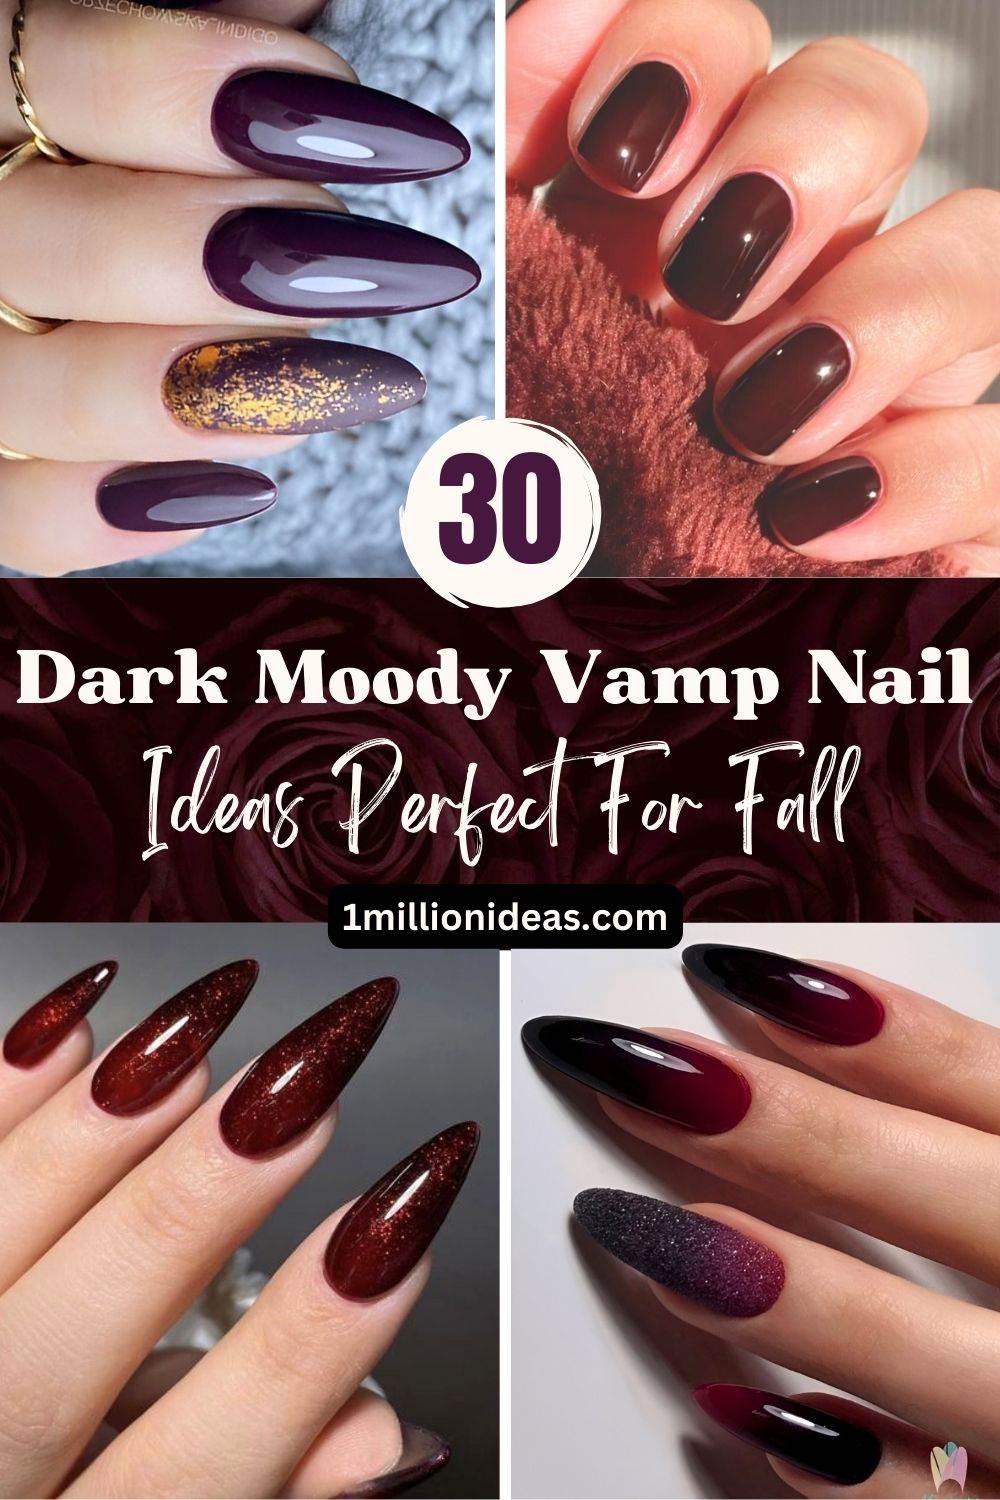 30 Dark Moody Vamp Nail Ideas Perfect For Fall - 191